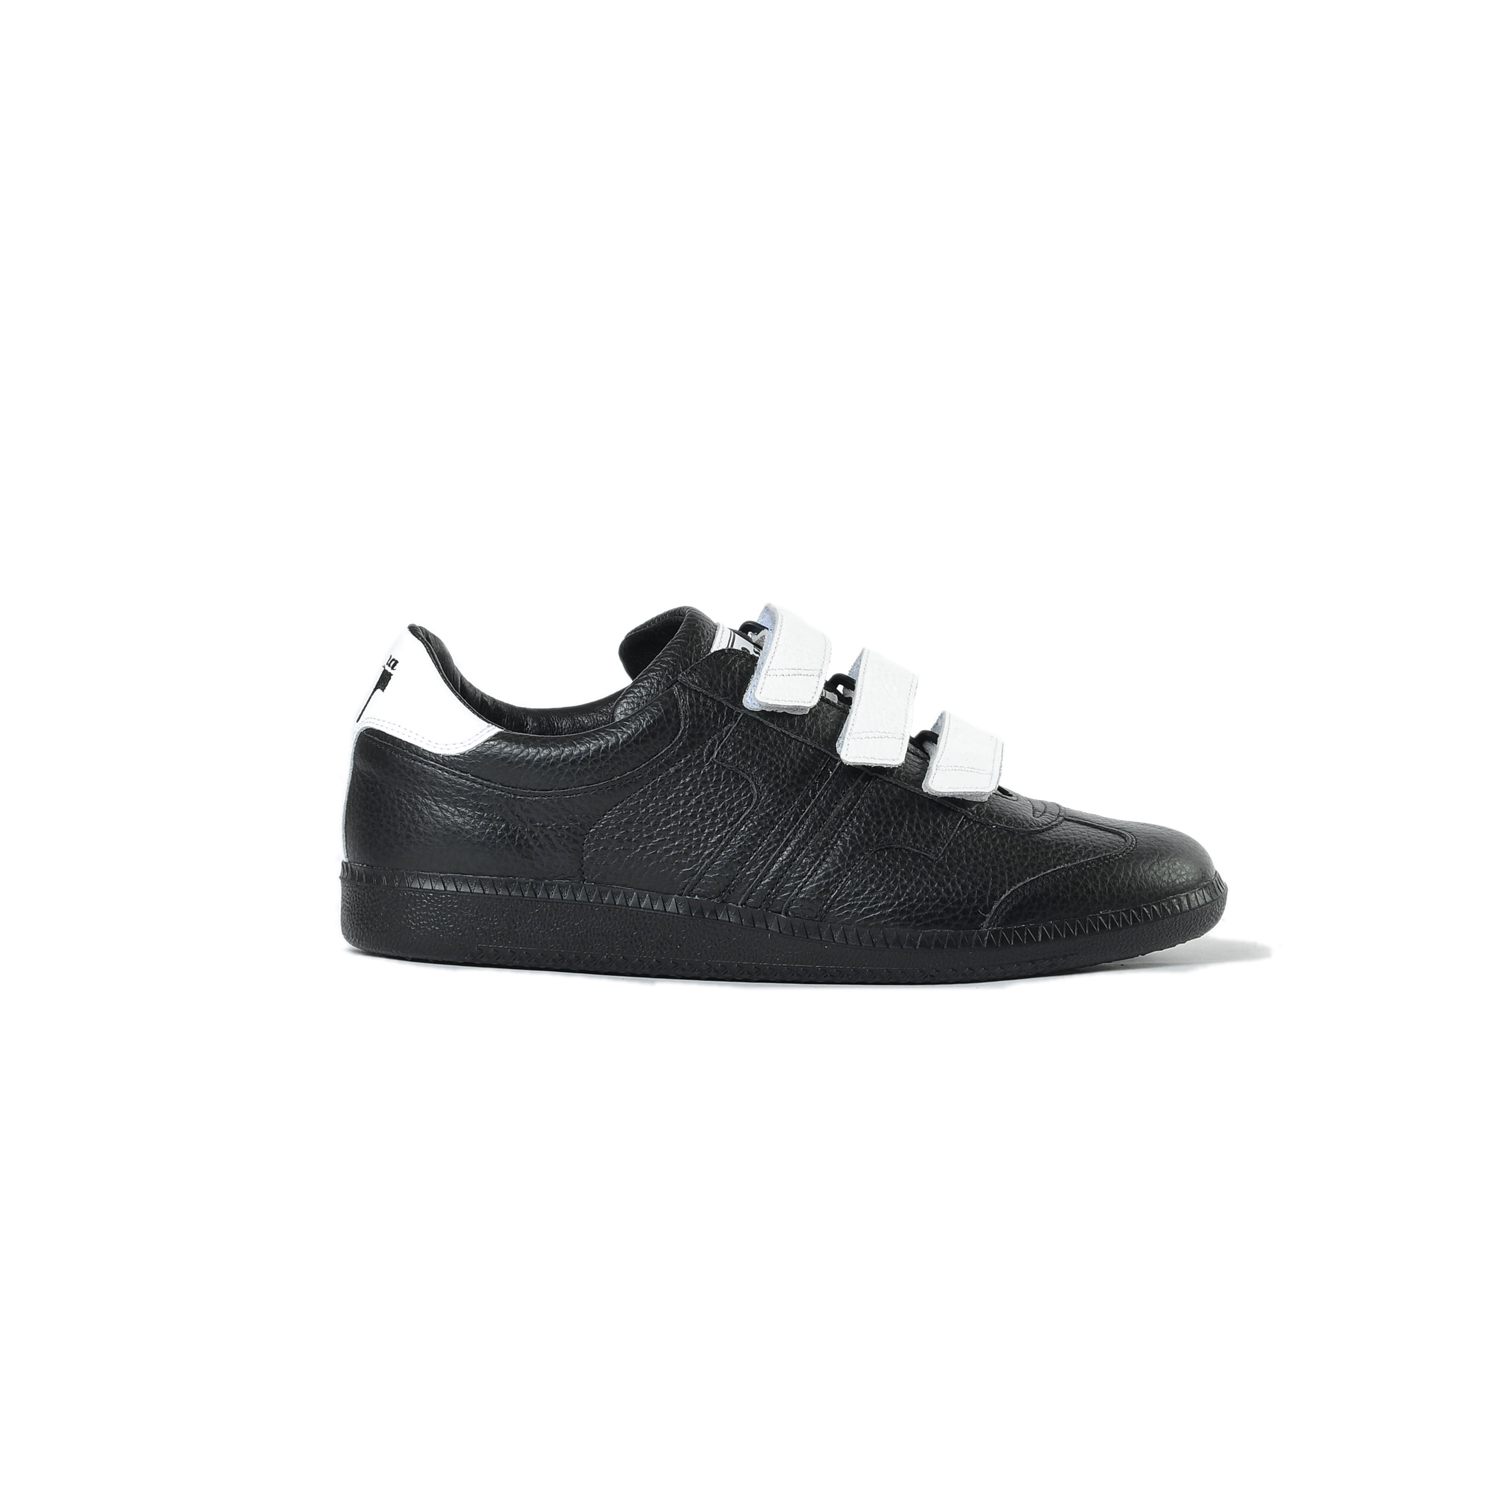 Tisza shoes - Compakt delux - Black-white